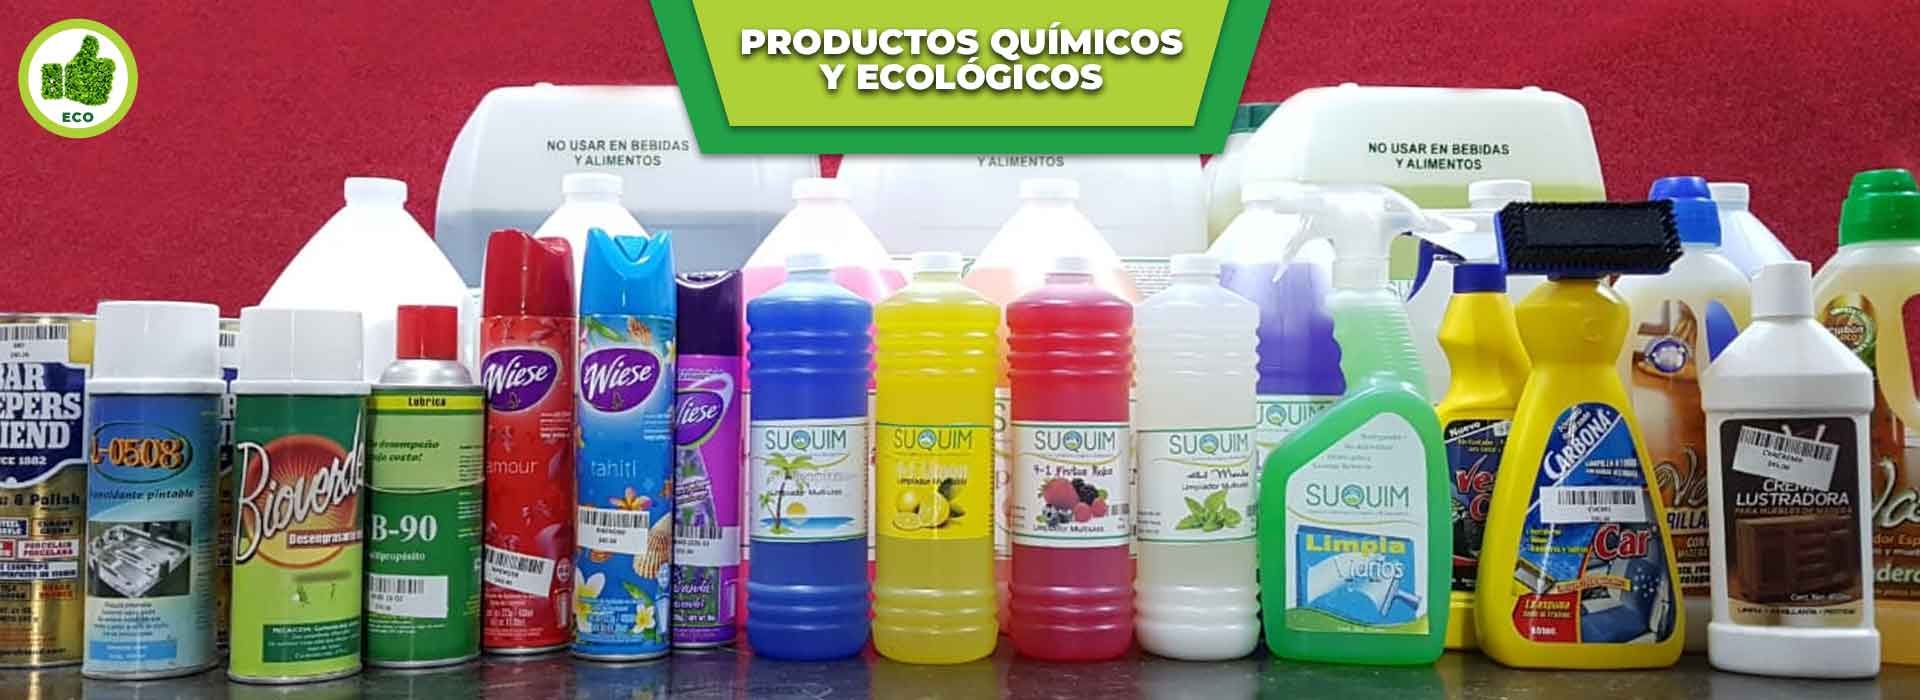 productos-quimicos-ecologicos-biodegradables